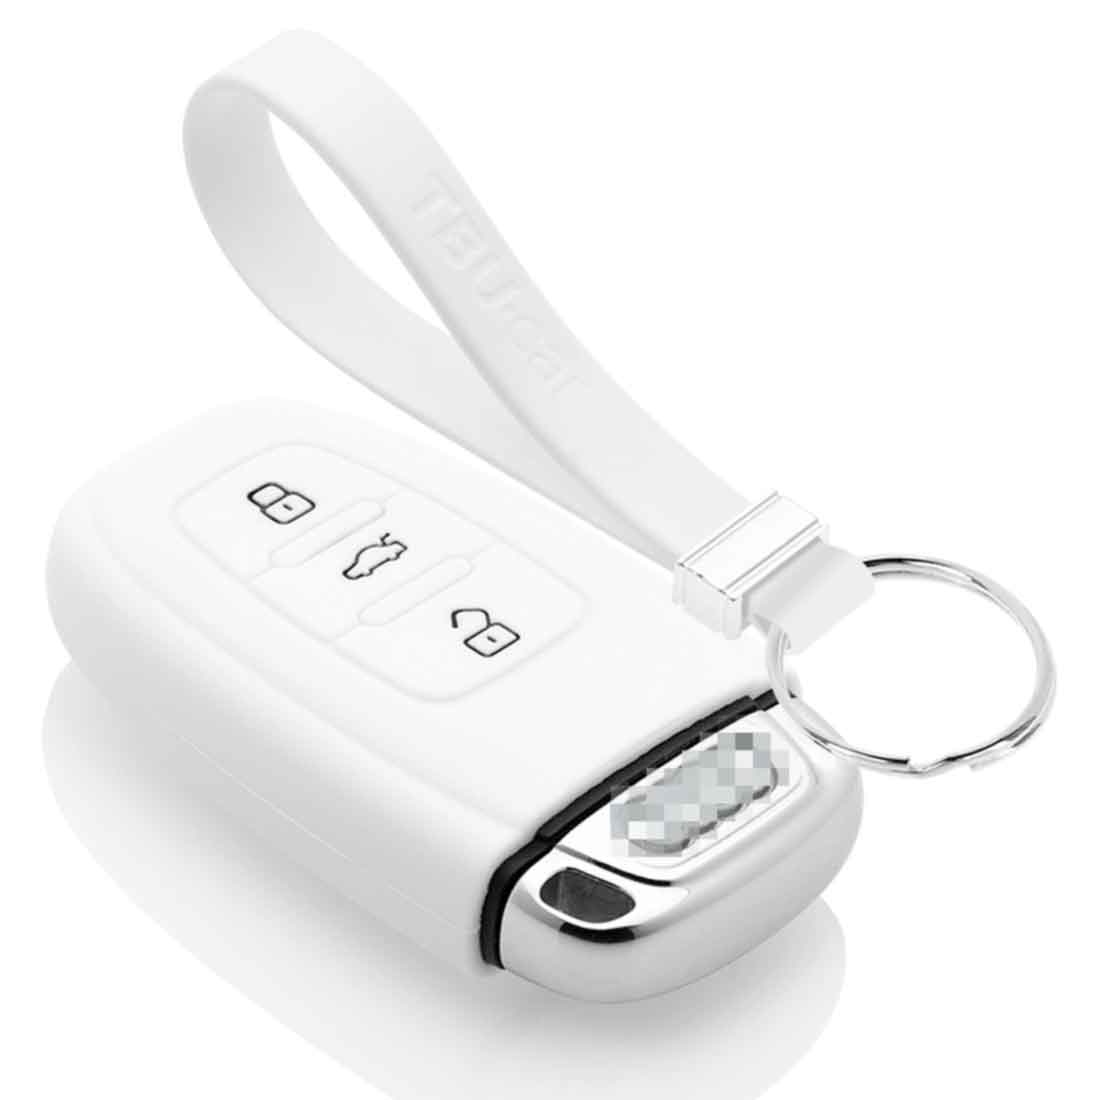 TBU car TBU car Car key cover compatible with Audi - Silicone Protective Remote Key Shell - FOB Case Cover - White